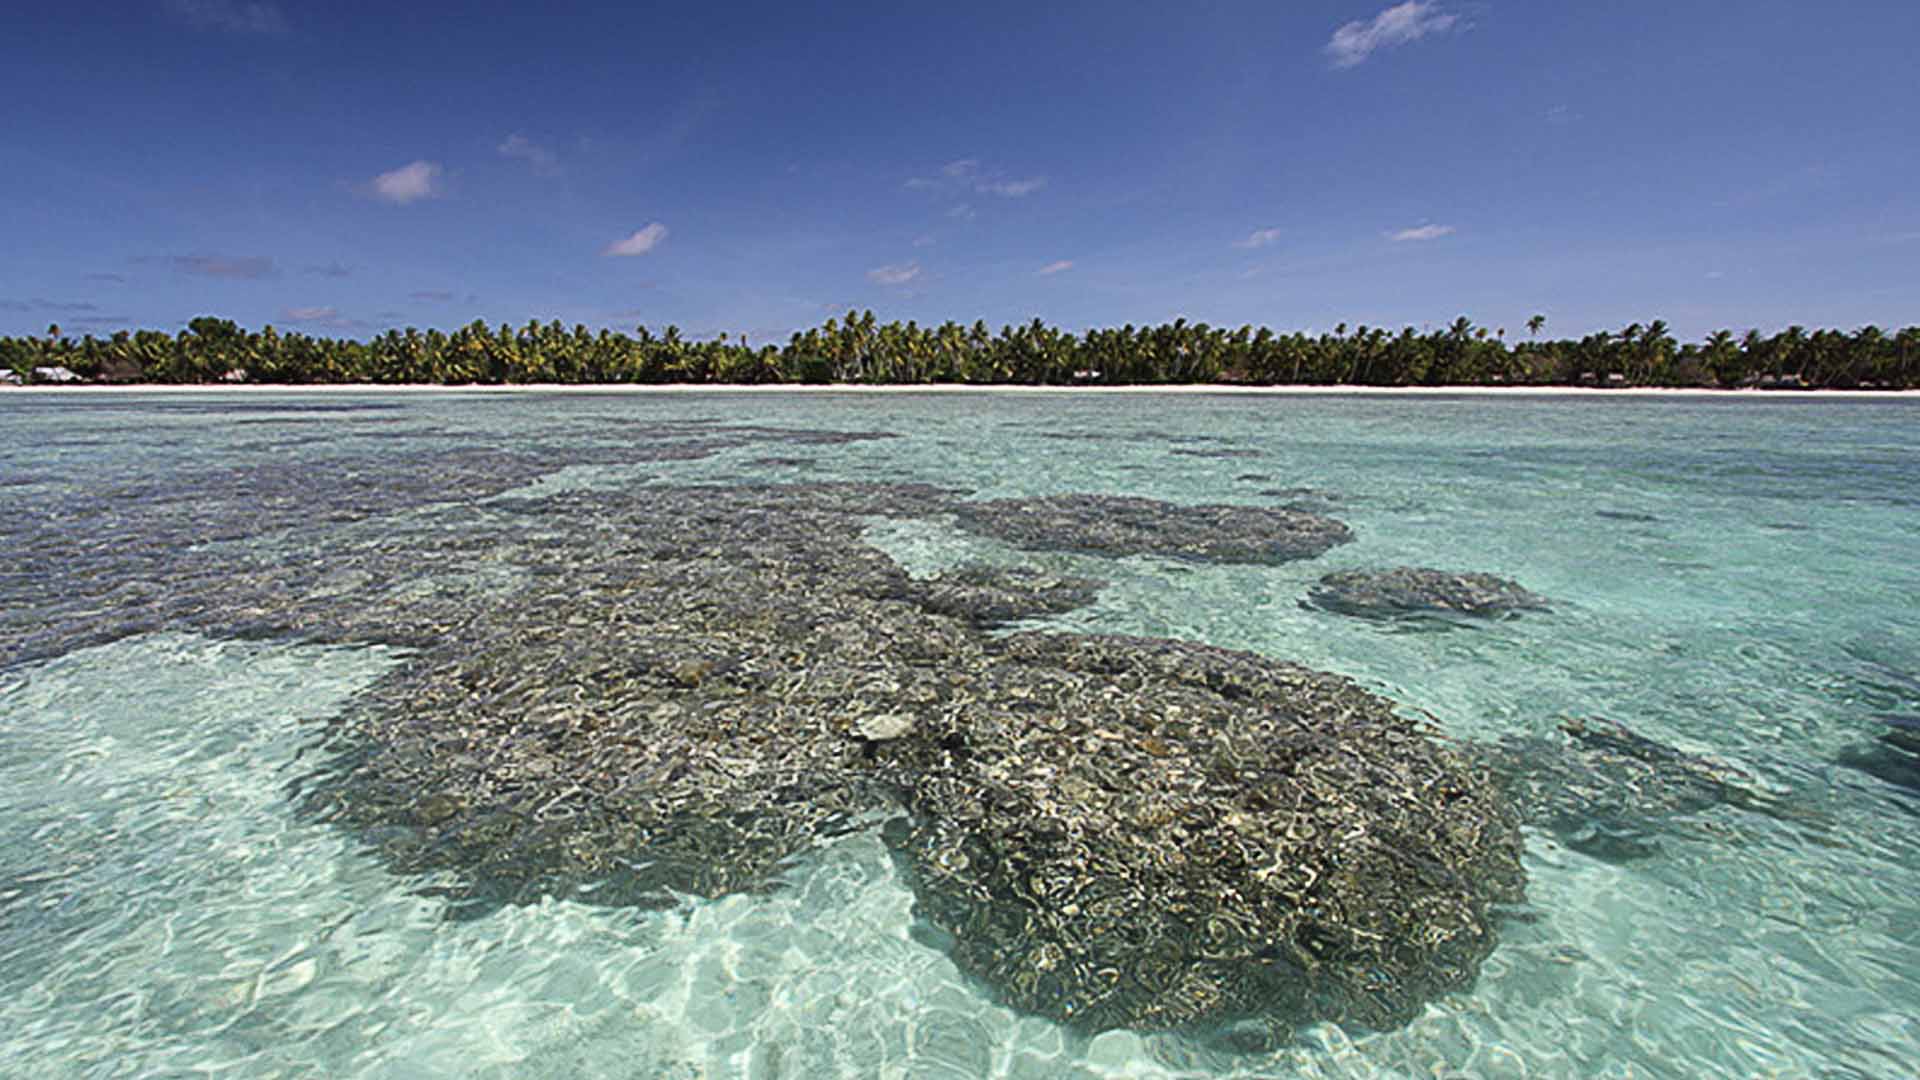 Kiribati. Photo credits: www.flicker/oggiscienza.com